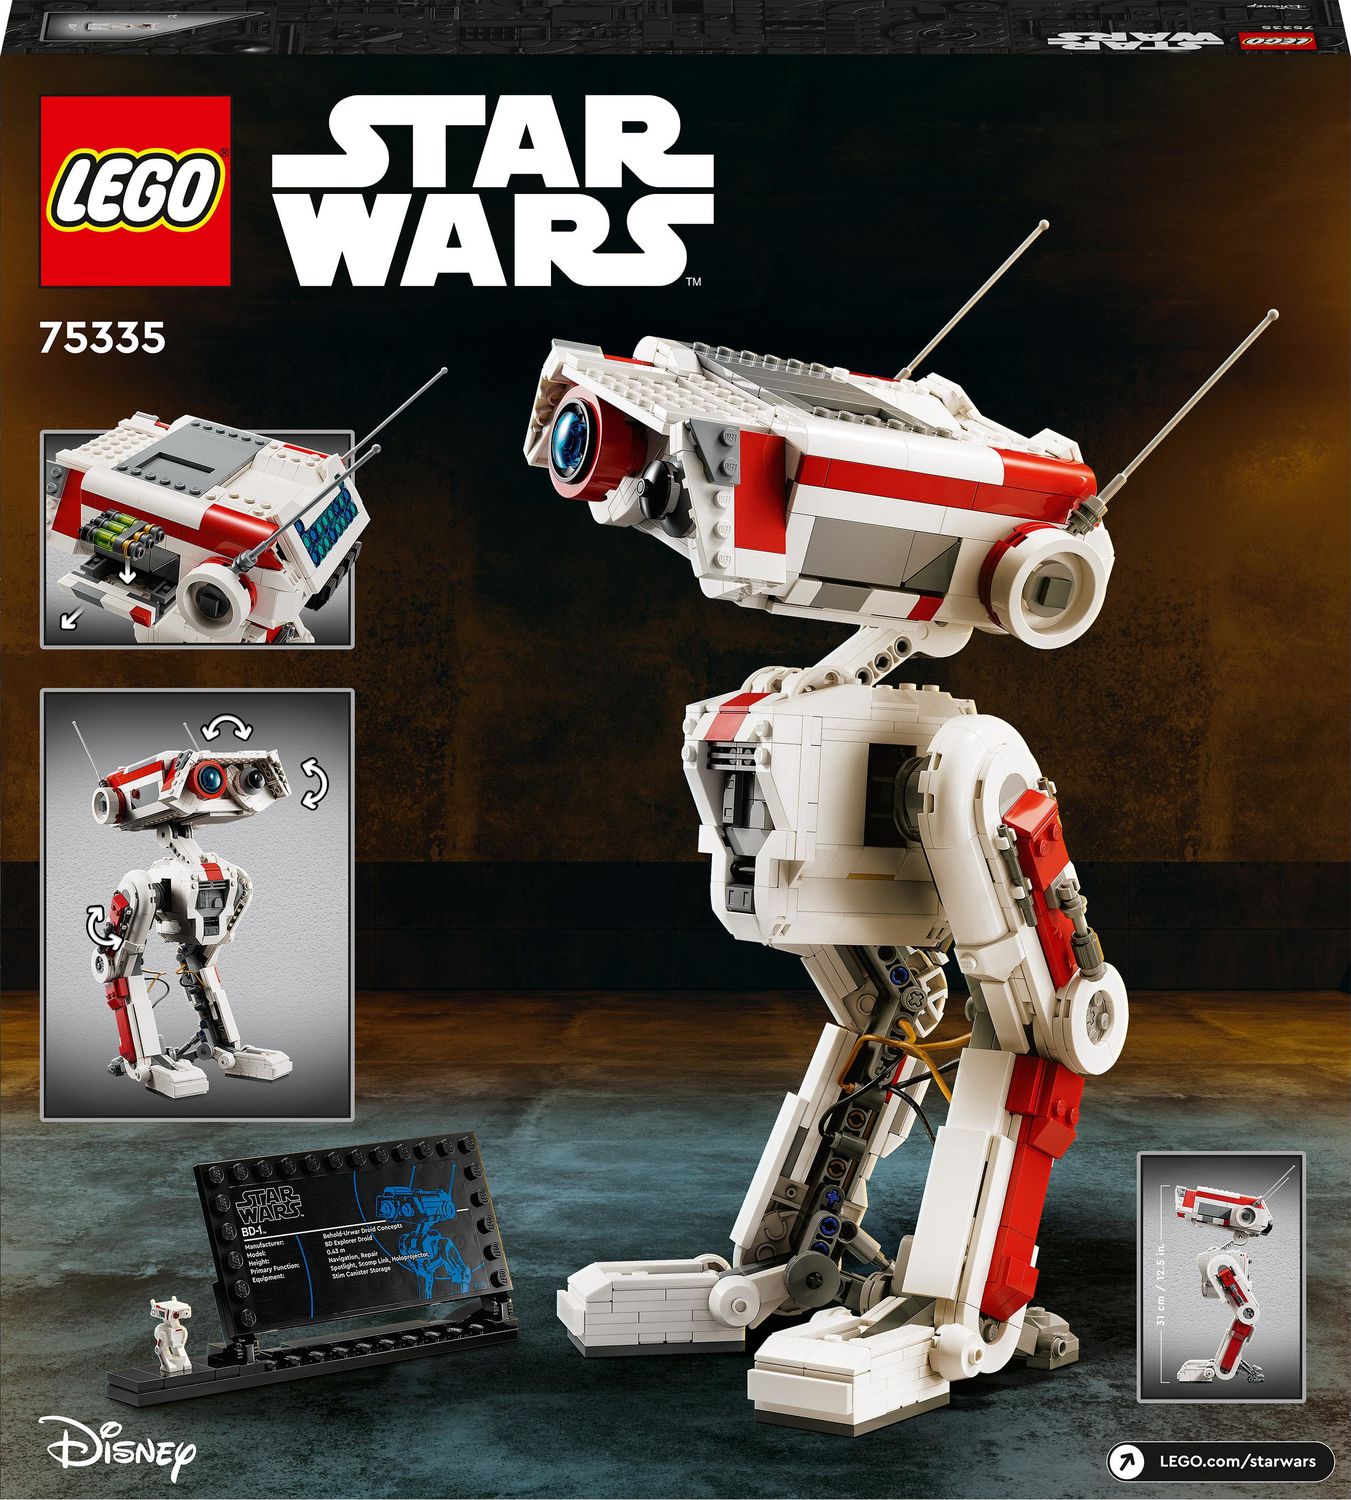 LEGO Star Wars Droid Model Building Kit - Imagine That